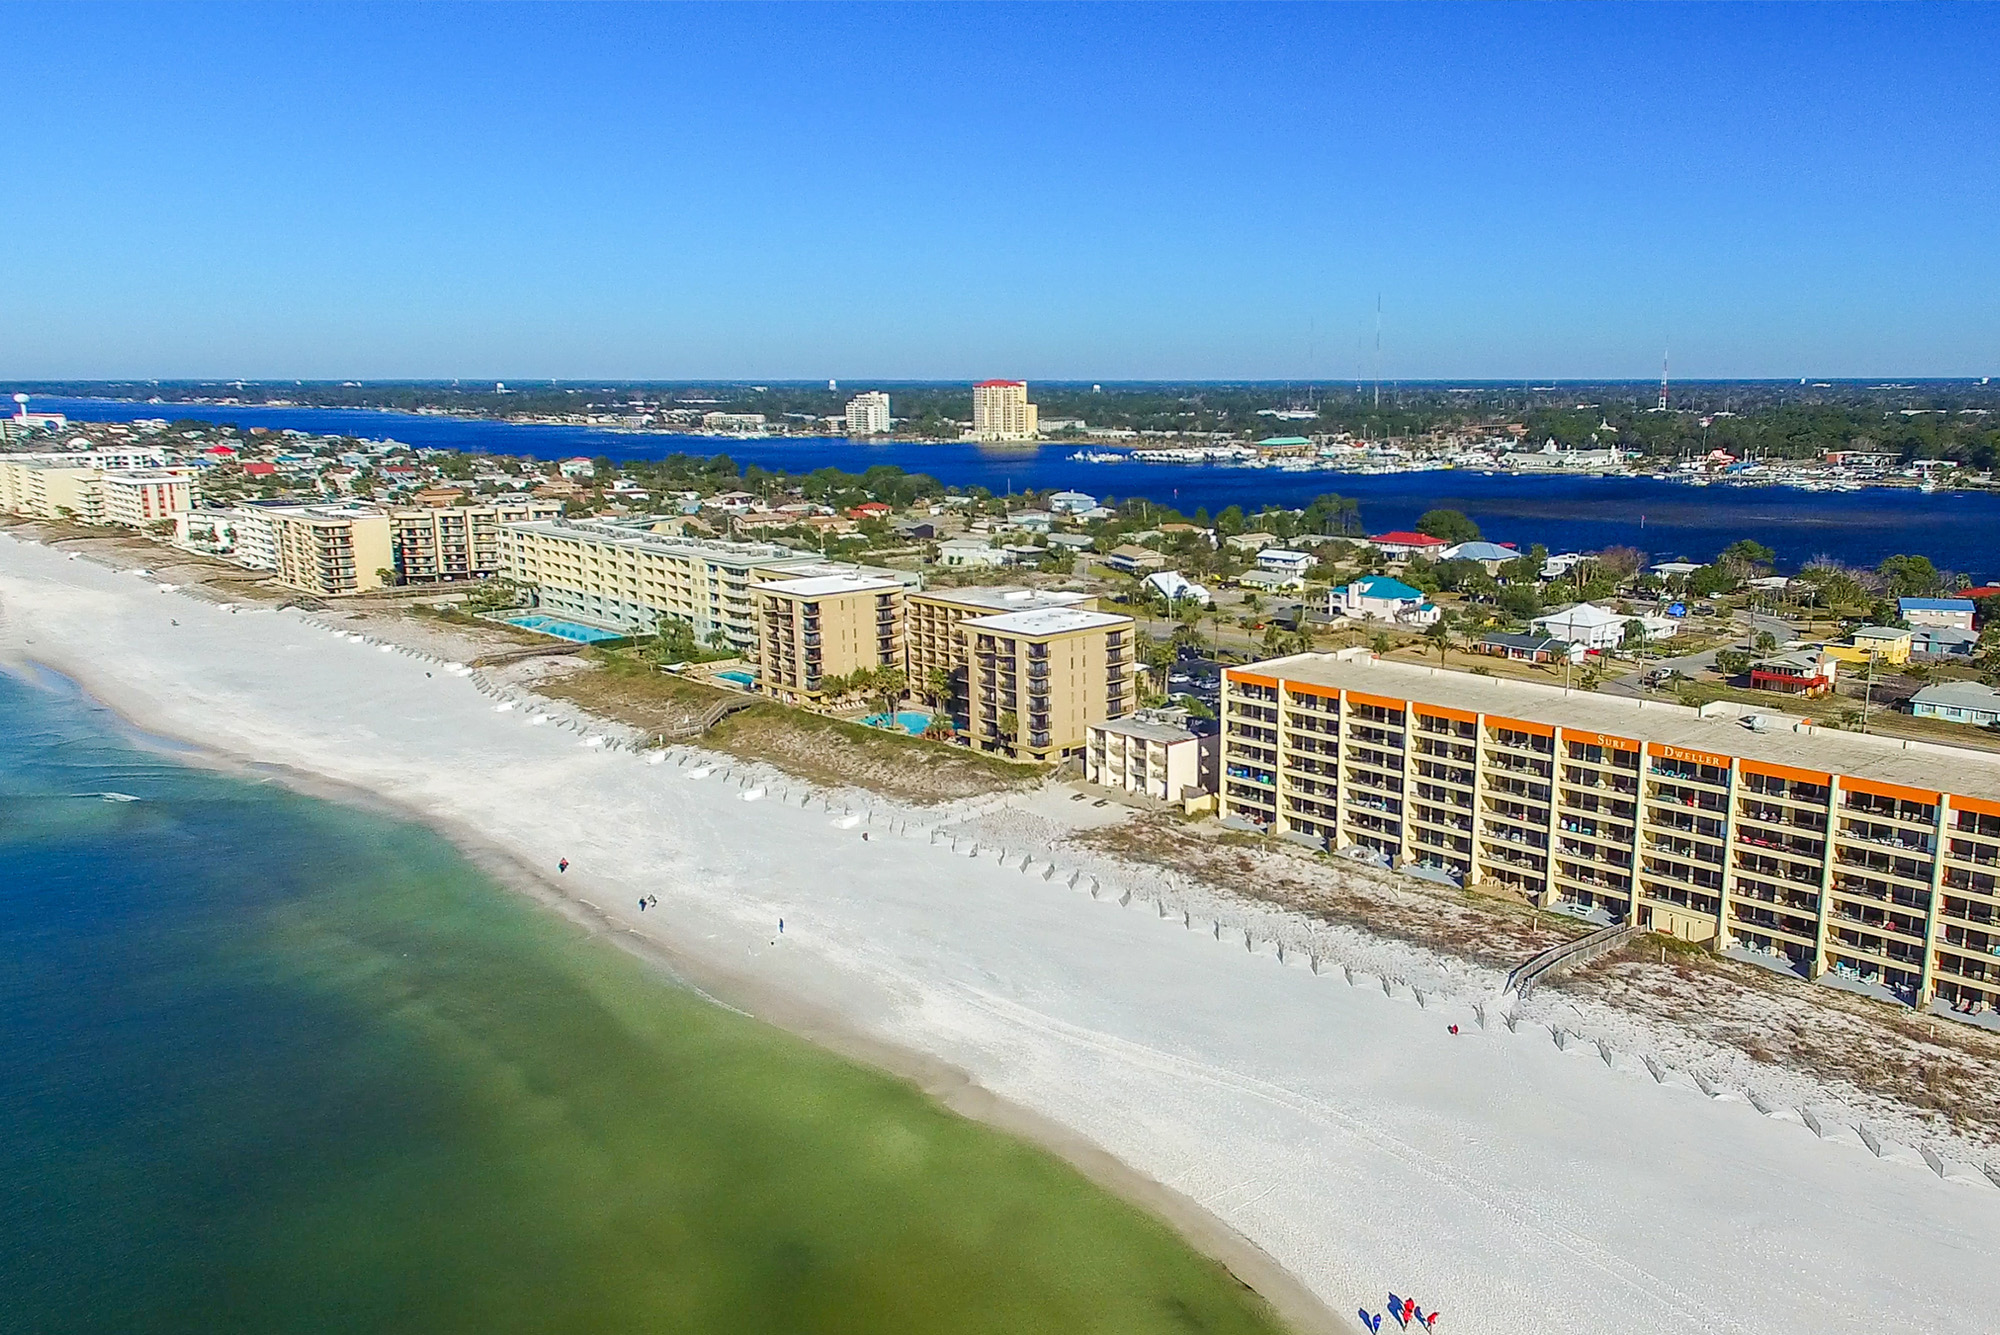 Panama City Beach, Florida coastline of hotels, homes, and shops